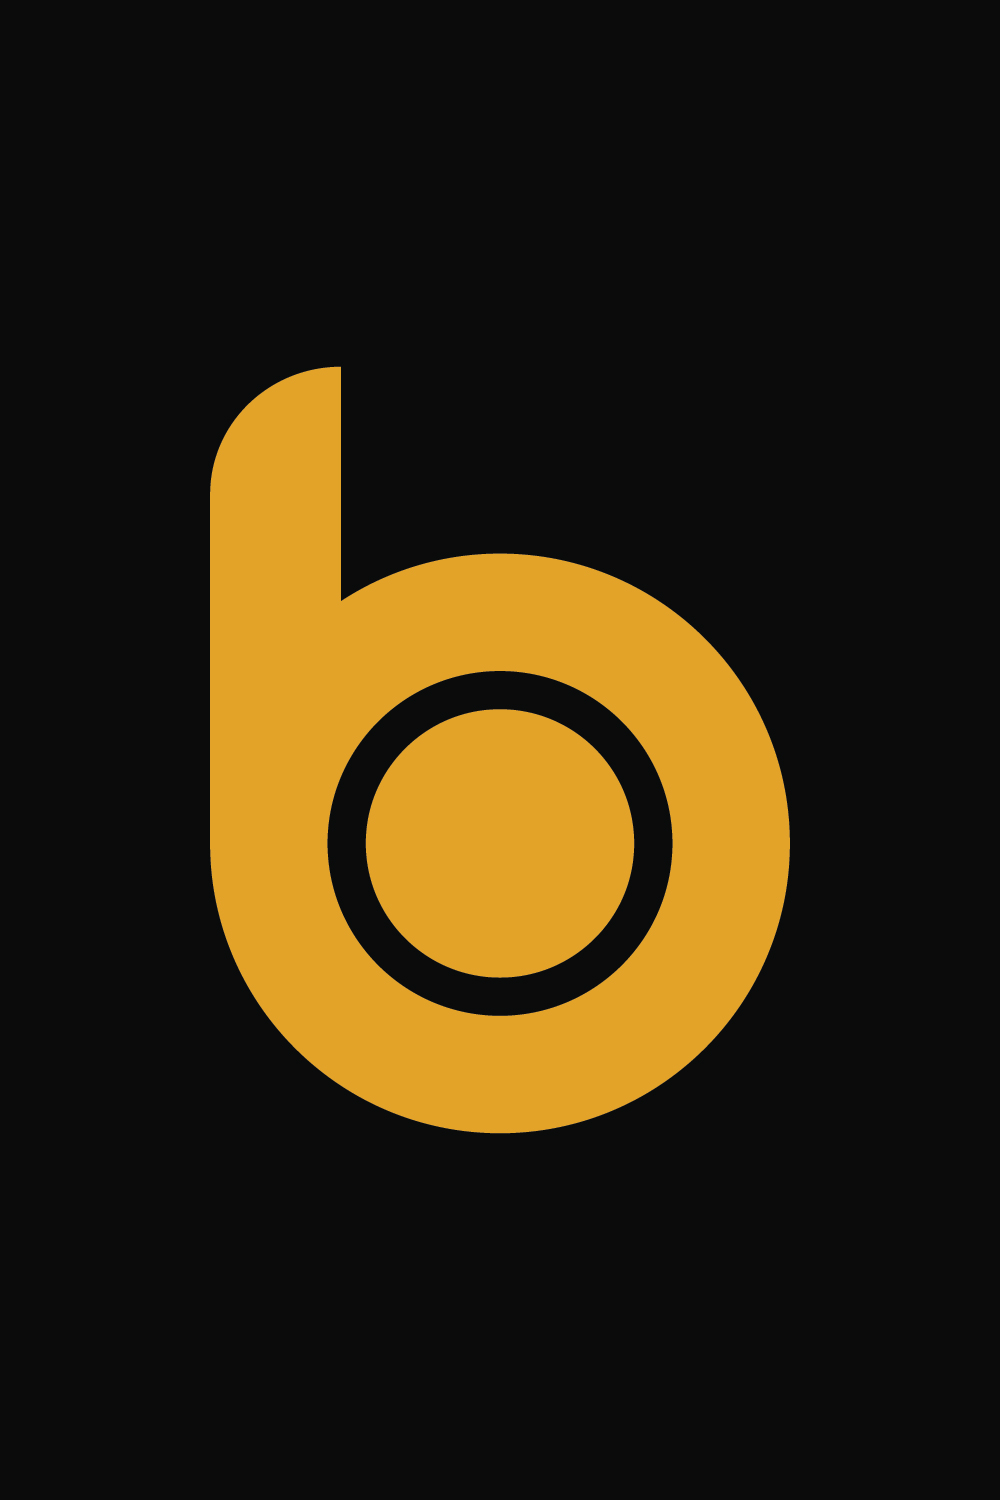 Logo B Design Template Pinterest image.